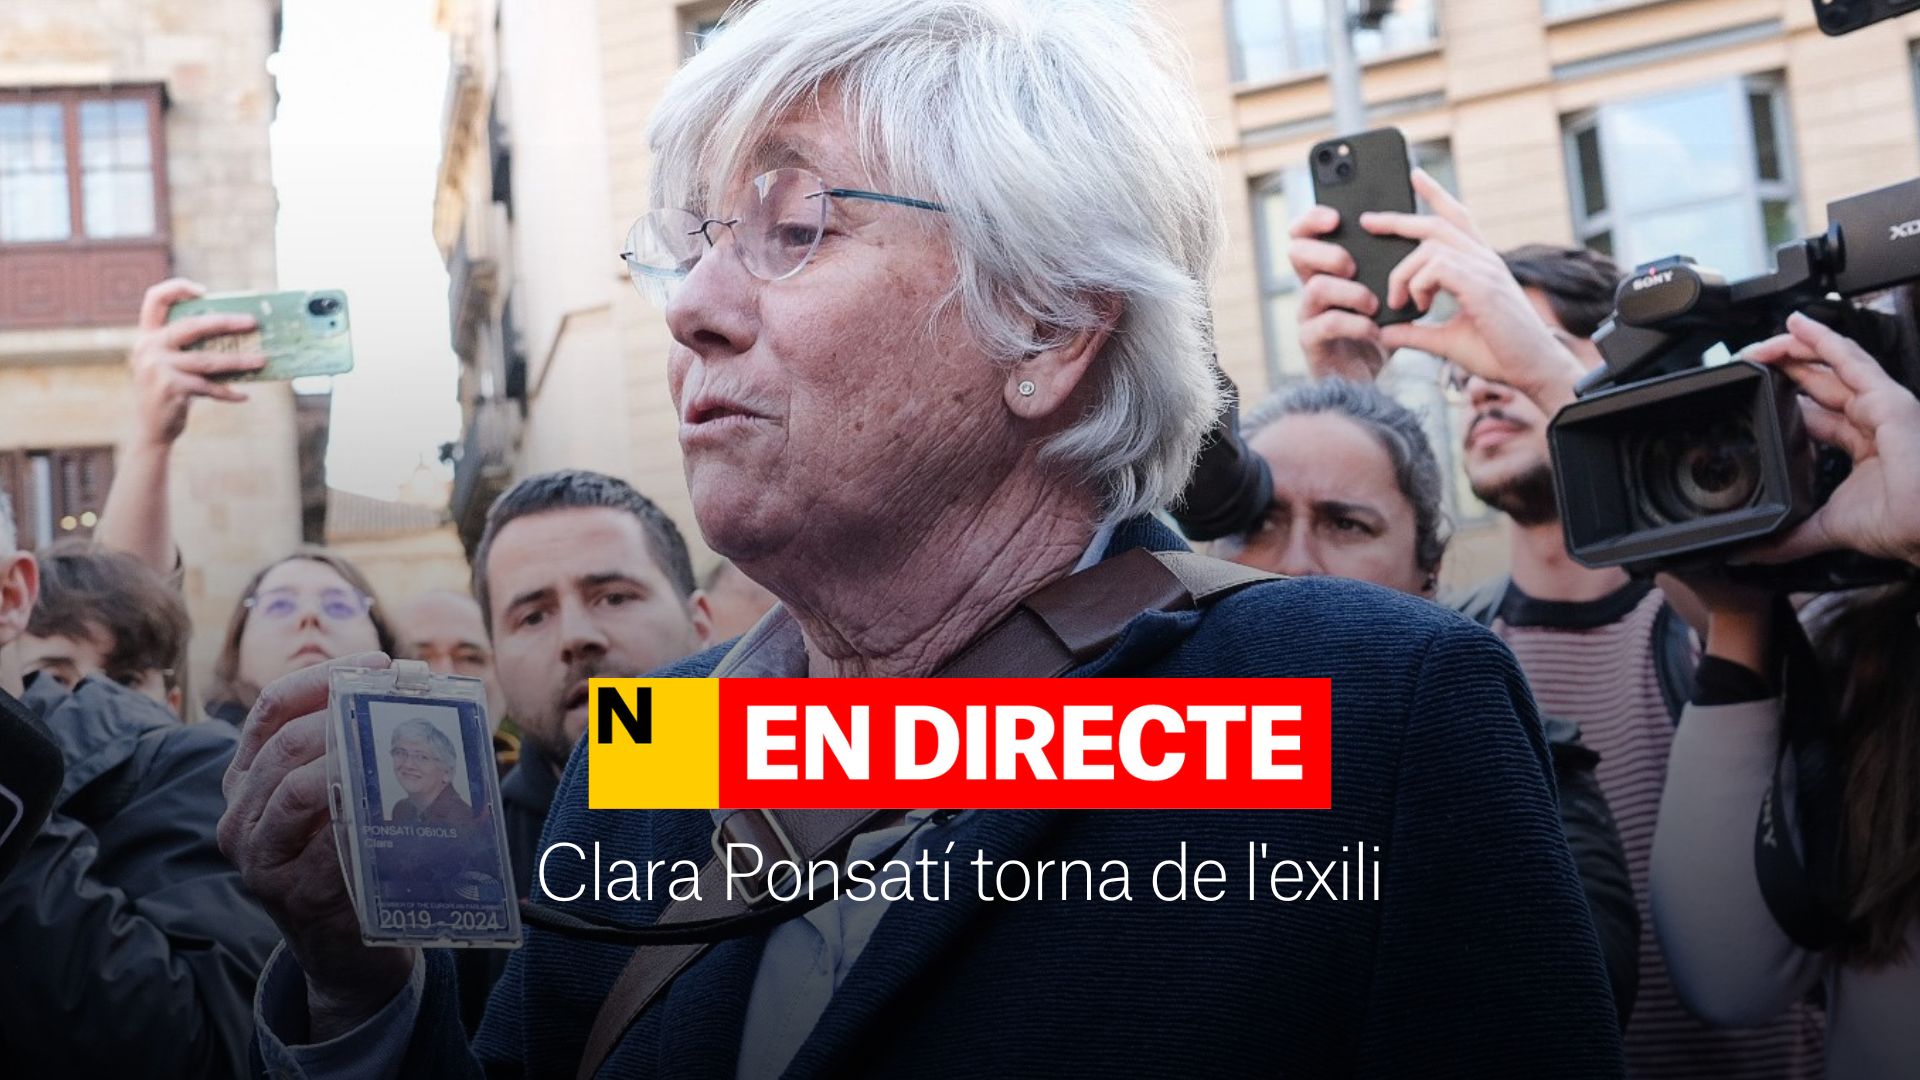 Clara Ponsatí vuelve a Barcelona, DIRECTO | En libertad después de ser detenida